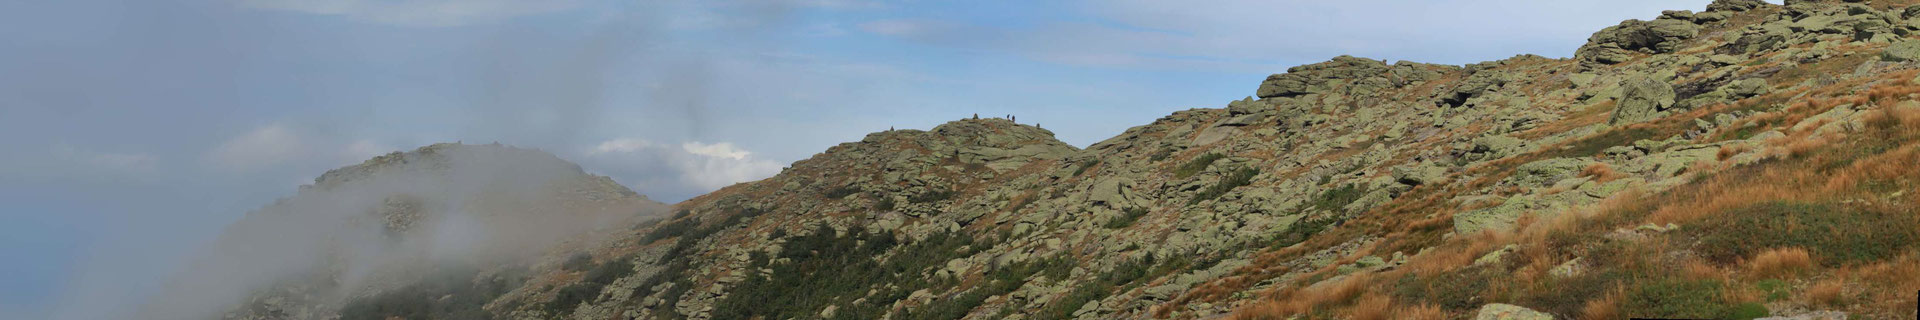 Mount Lafayette and Franconia Ridge Trail, NH, USA. Canon EOS 80D, EF 70-300mm f/4-5.6 IS II USM à 70mm, f/8, 1/250 s, 800 ISO